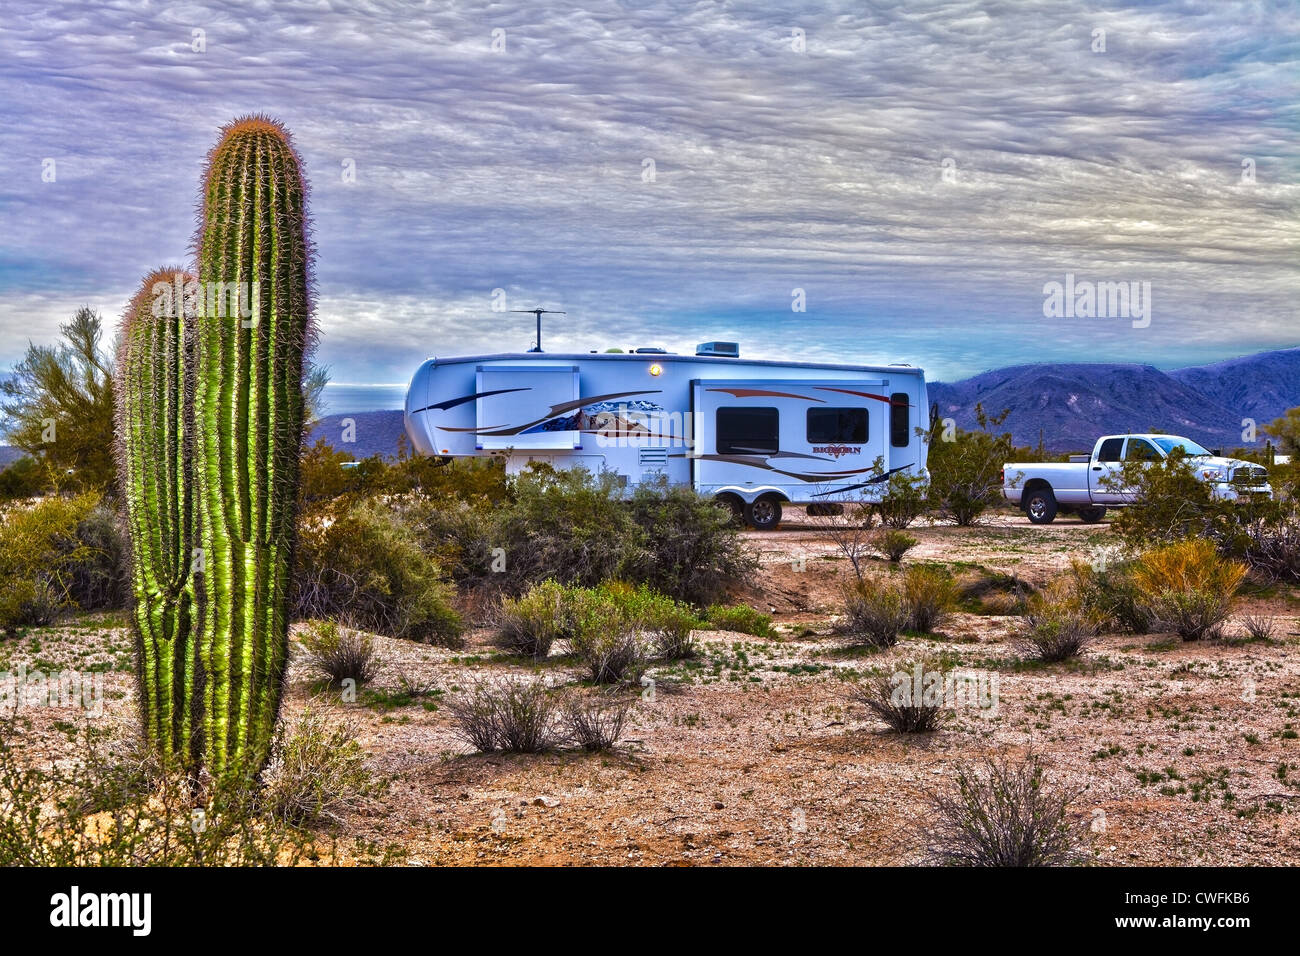 Saguaro cactus and recreational vehicle in the Arizona desert. Manipulated High Dynamic Range image. HDR Stock Photo